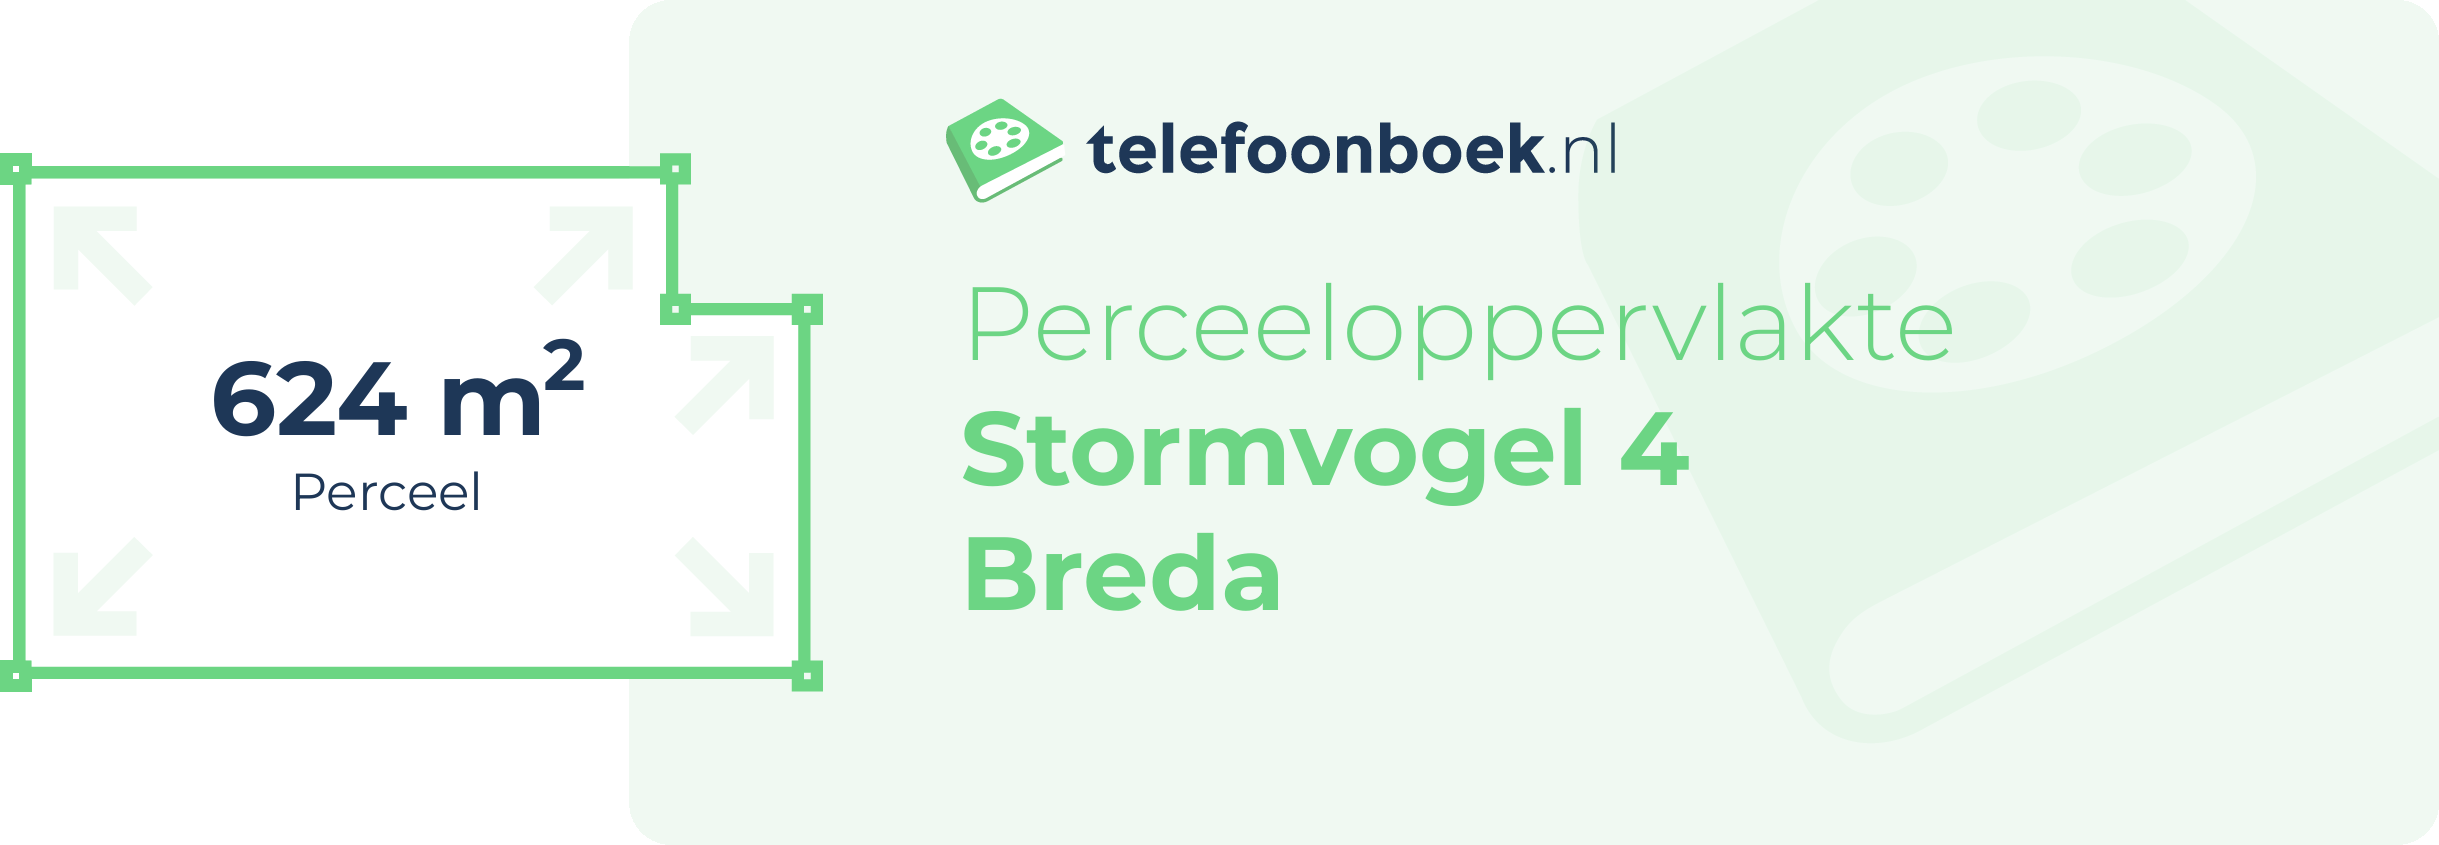 Perceeloppervlakte Stormvogel 4 Breda